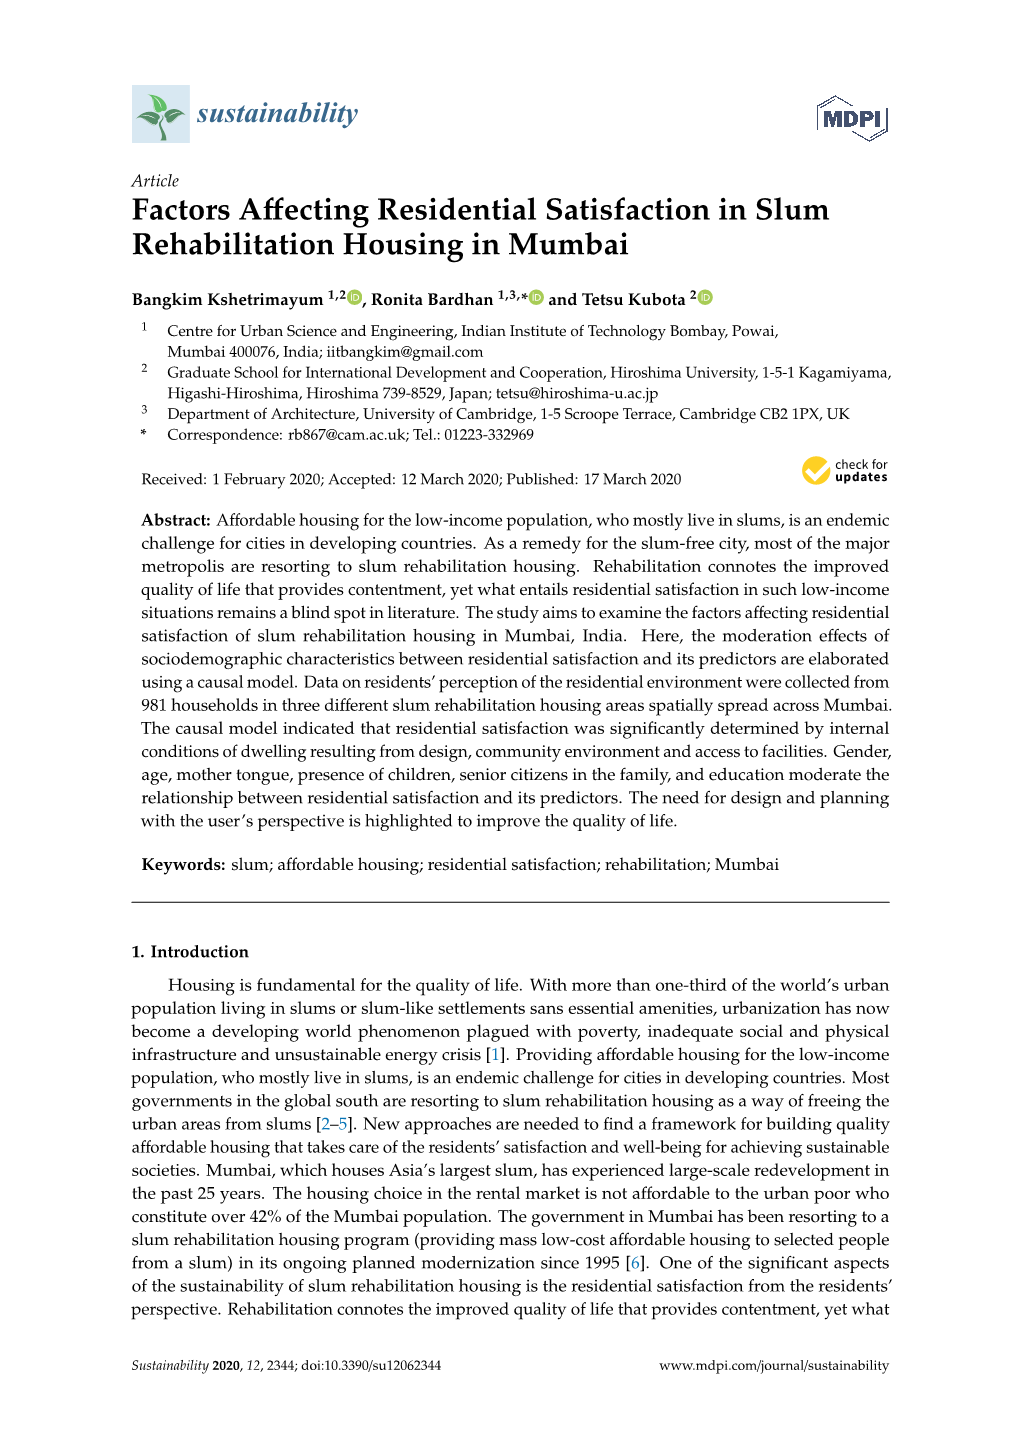 Factors Affecting Residential Satisfaction in Slum Rehabilitation Housing in Mumbai (As Shown in Table 1)